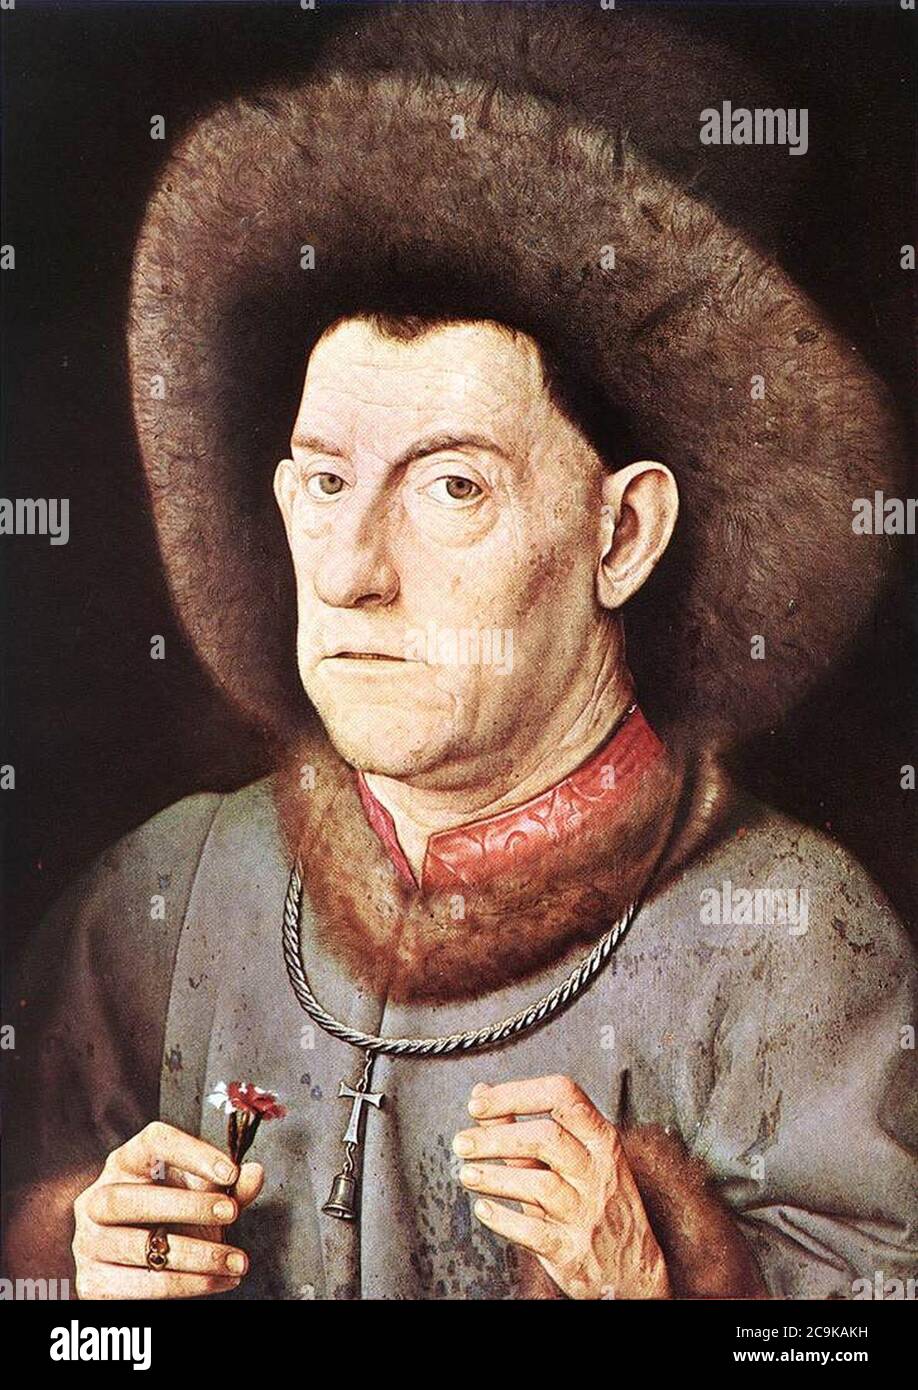 Jan van Eyck - Portrait of a Man with Carnation Stock Photo - Alamy